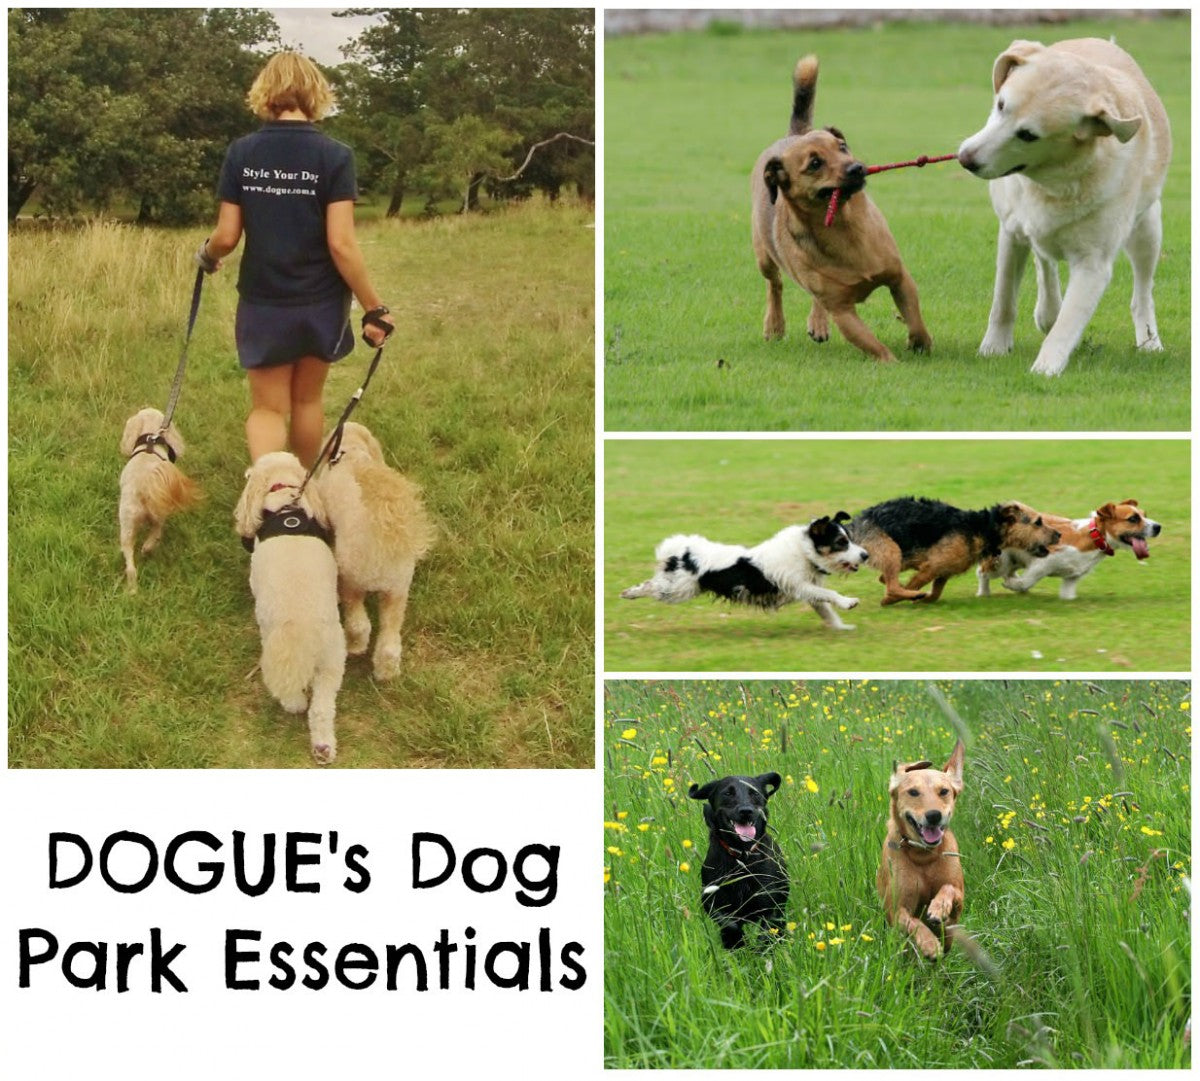 Dogues-Dog-Park-Essential-7_mini